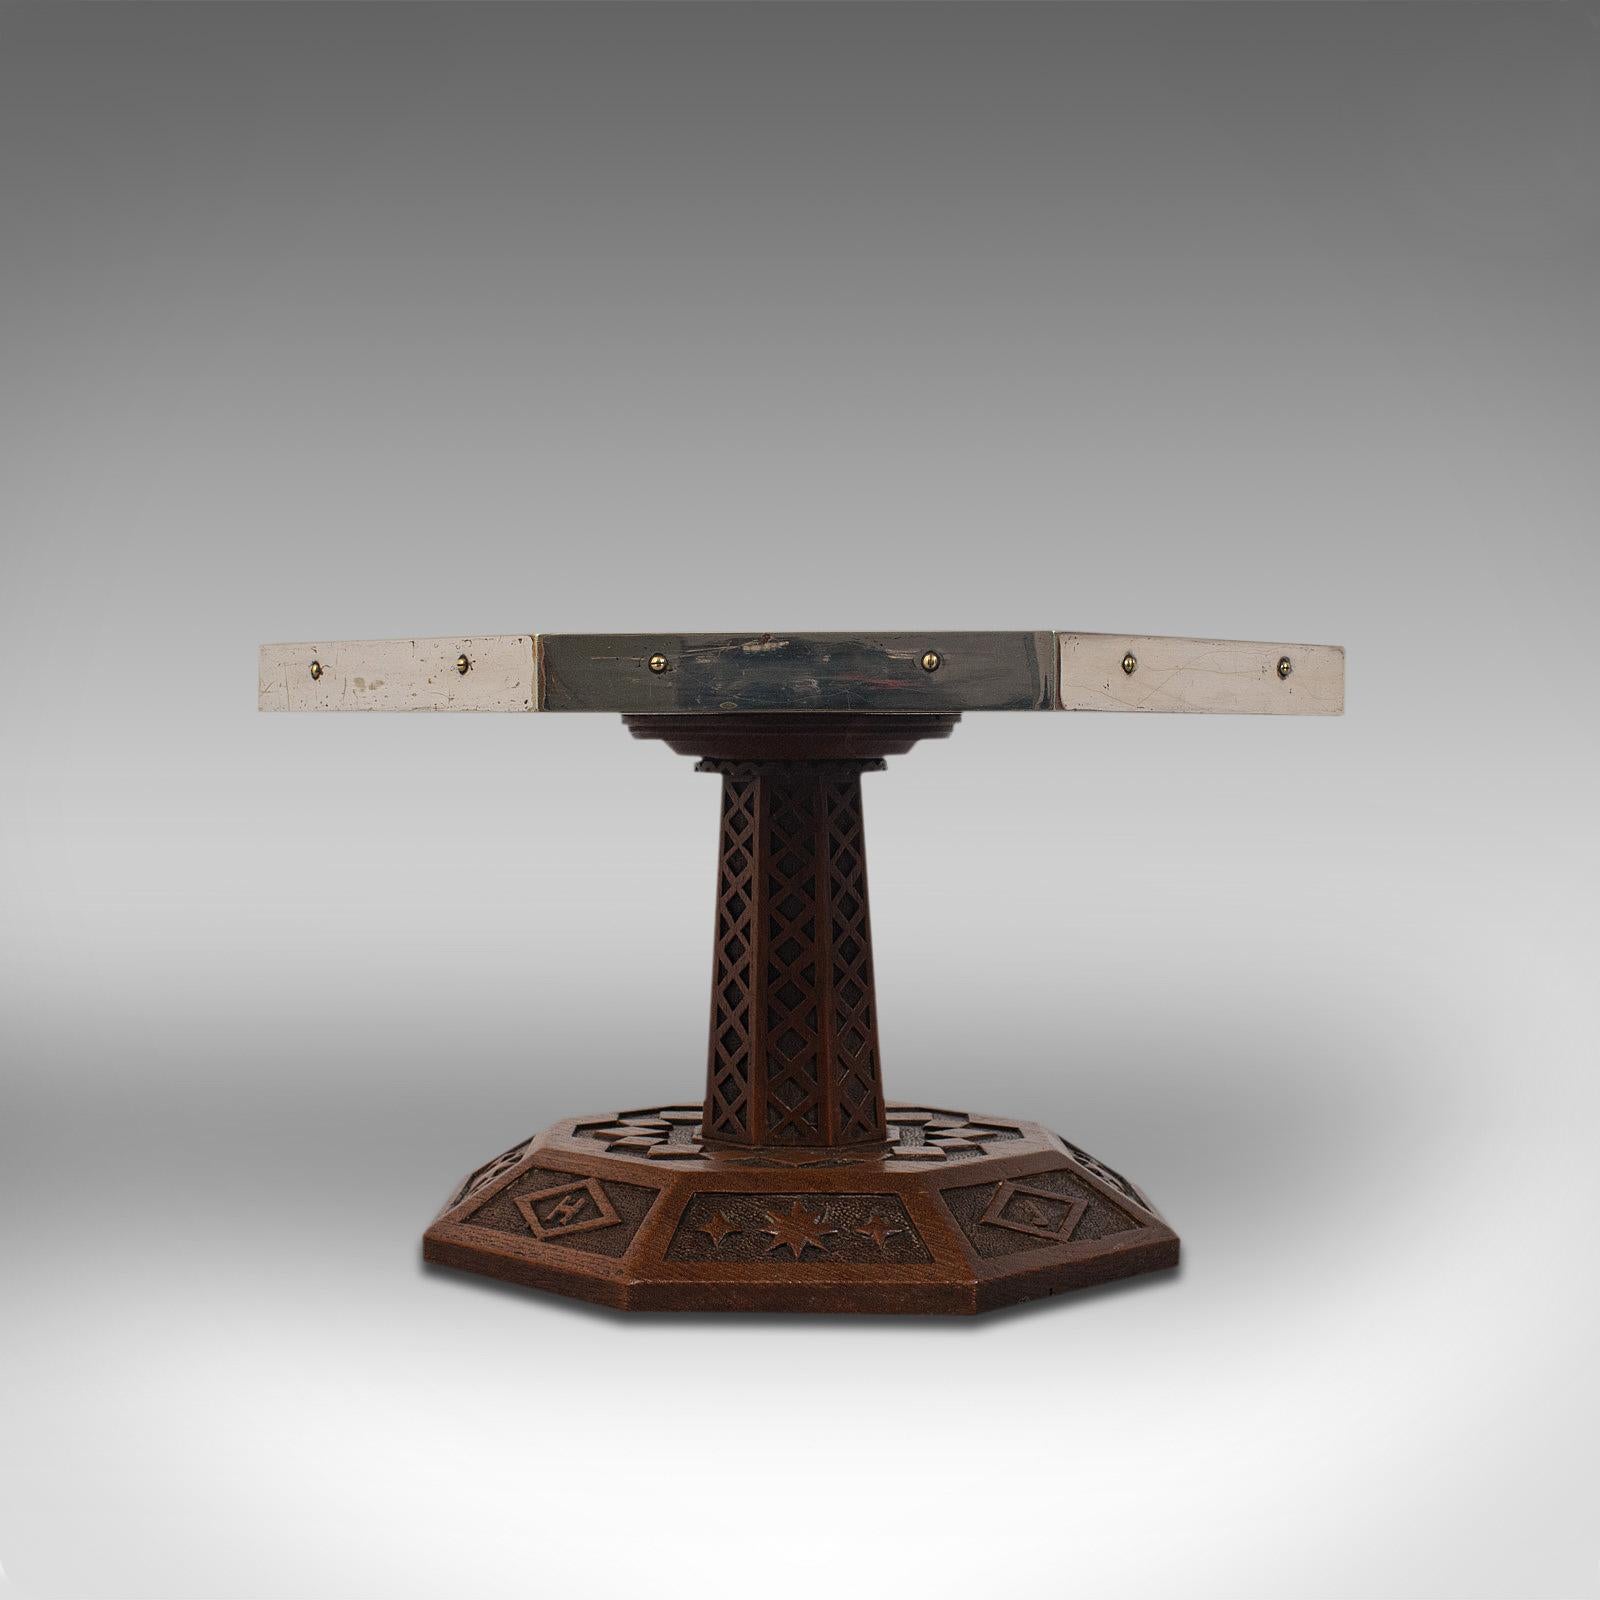 British Antique Revolving Table Top Platter, Oak, Lazy Susan, Ecclesiastical, Victorian